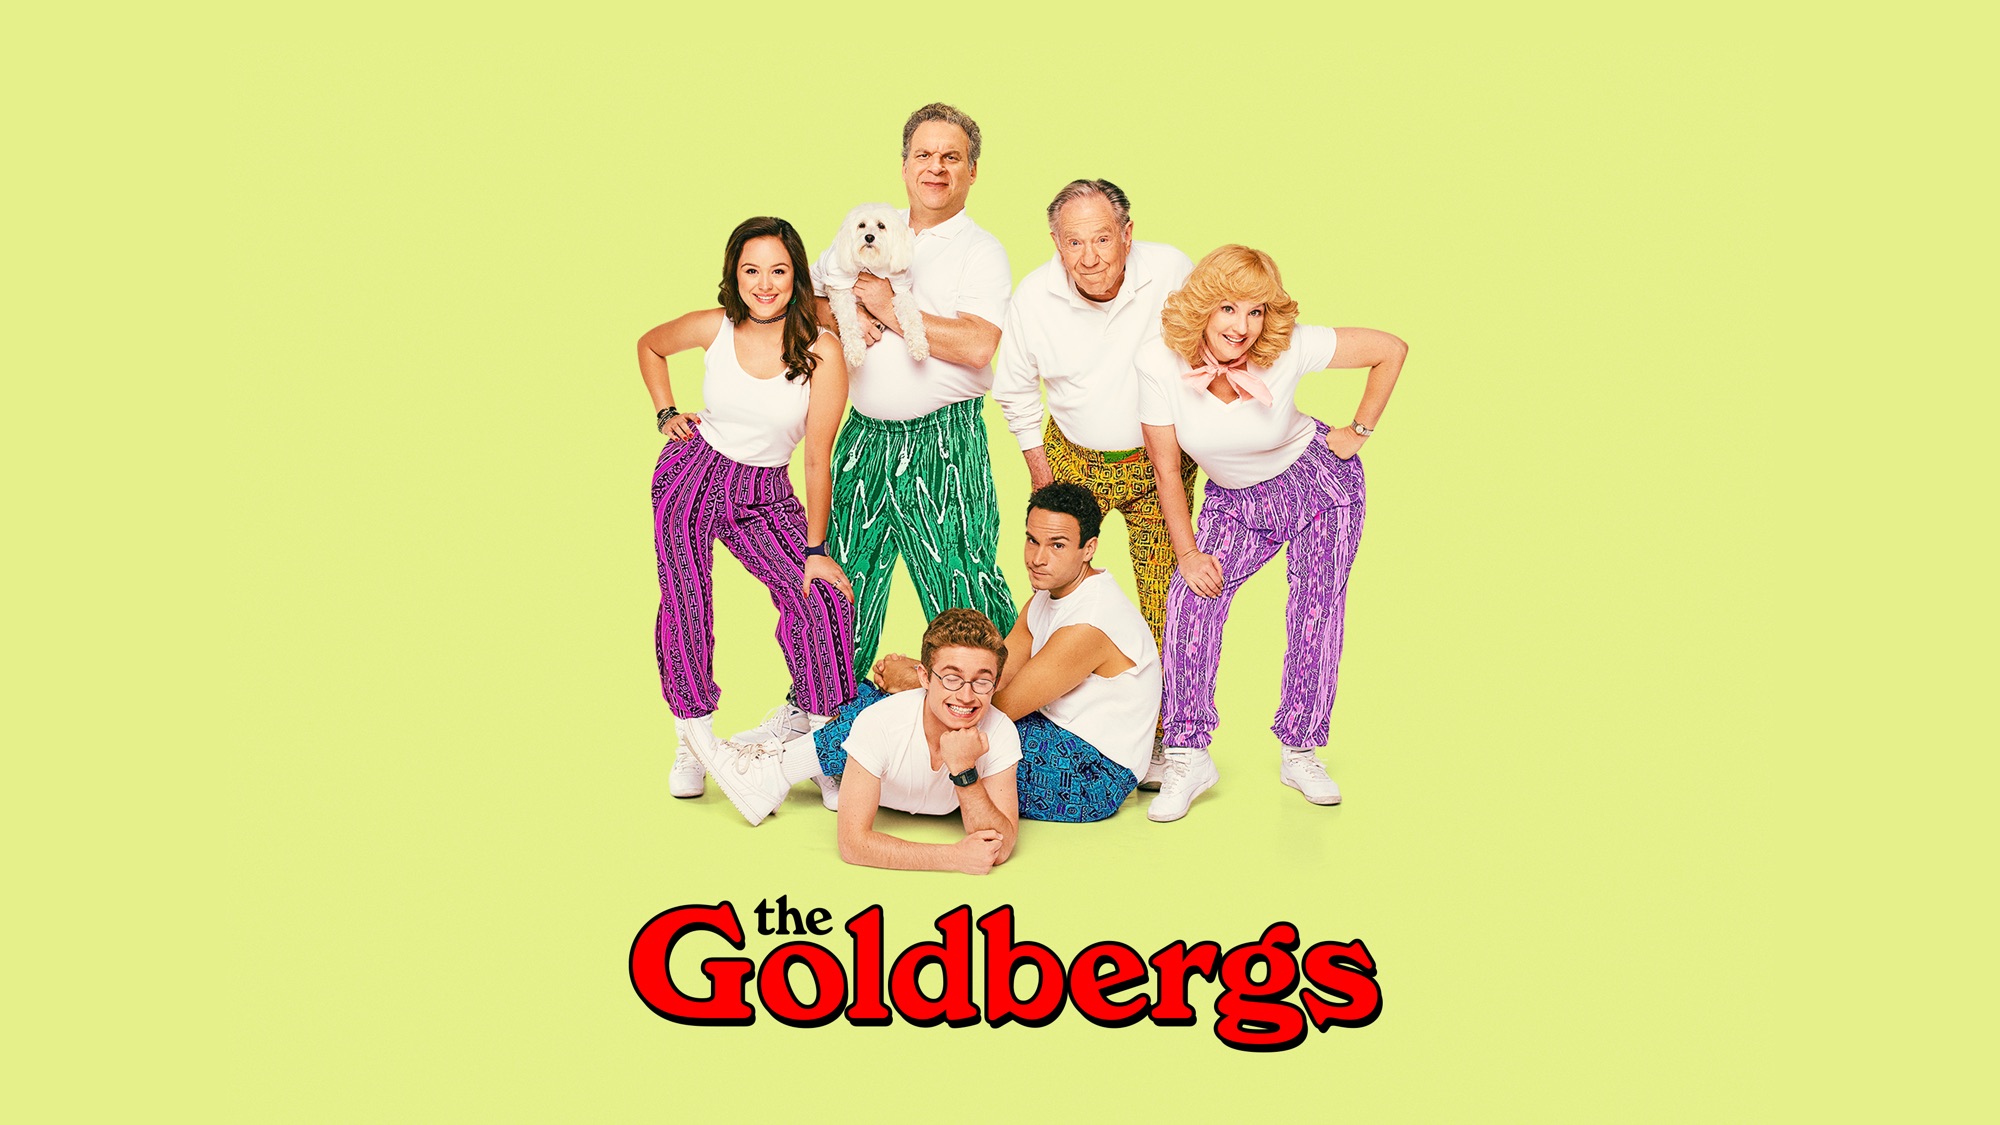 The Goldbergs HD Wallpaper